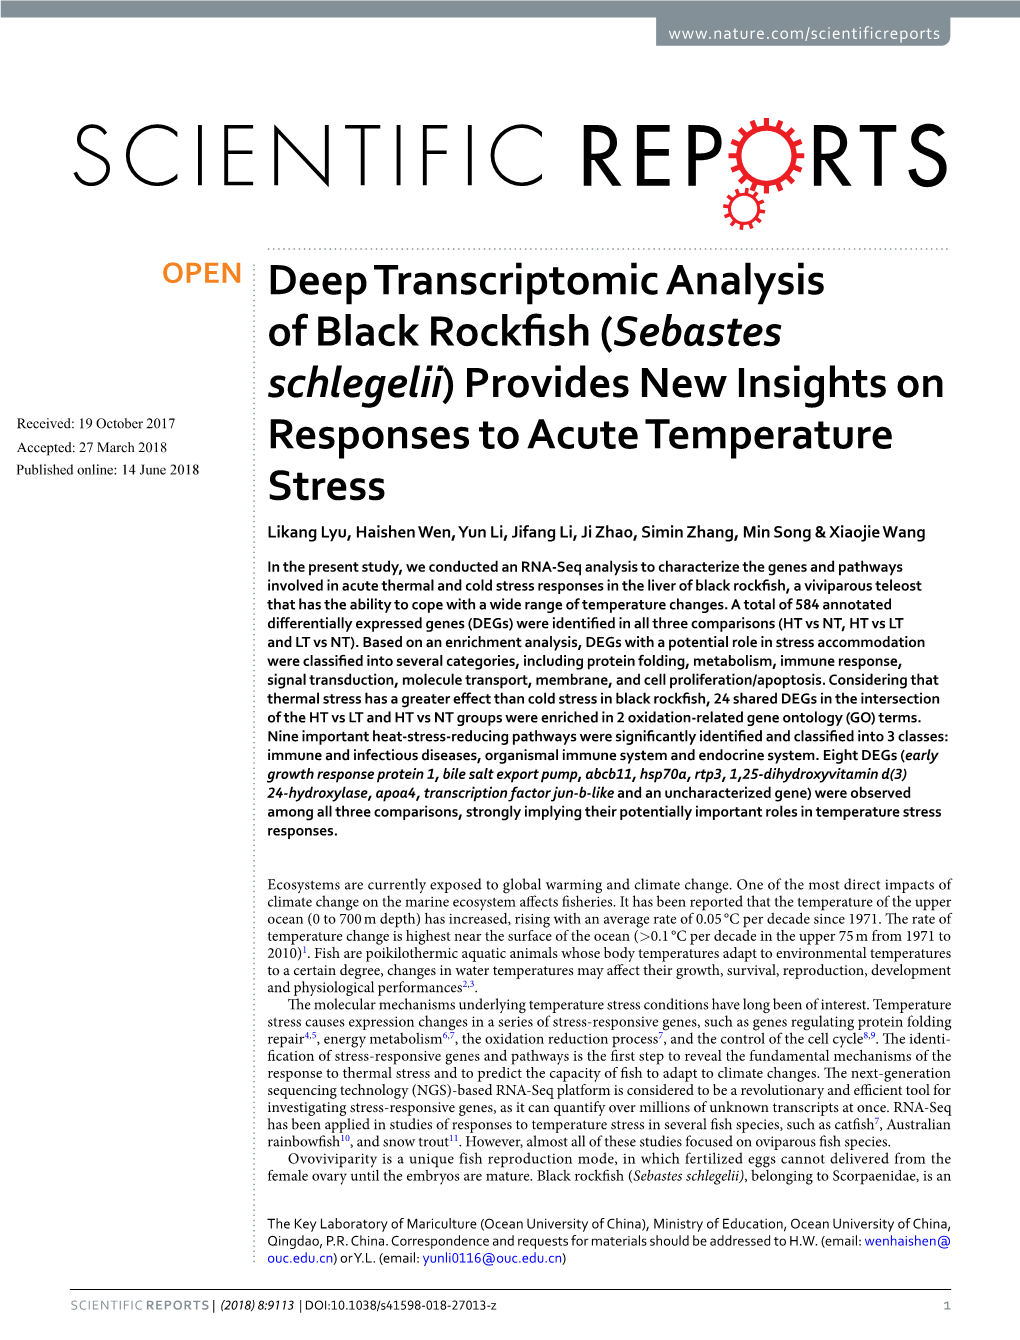 Deep Transcriptomic Analysis of Black Rockfish (Sebastes Schlegelii)